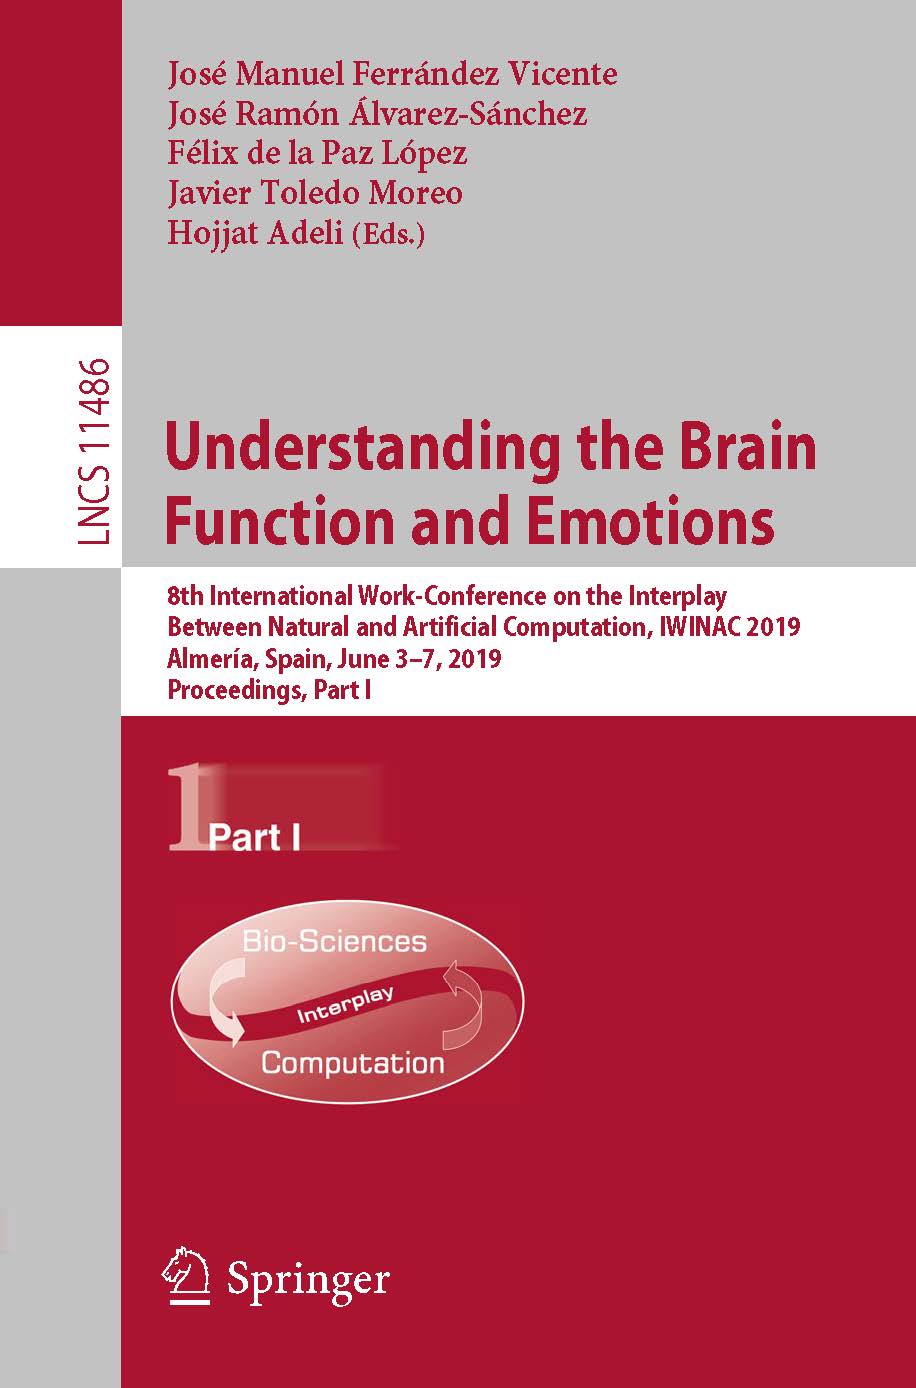 Imagen de portada del libro Understanding the Brain Function and Emotions